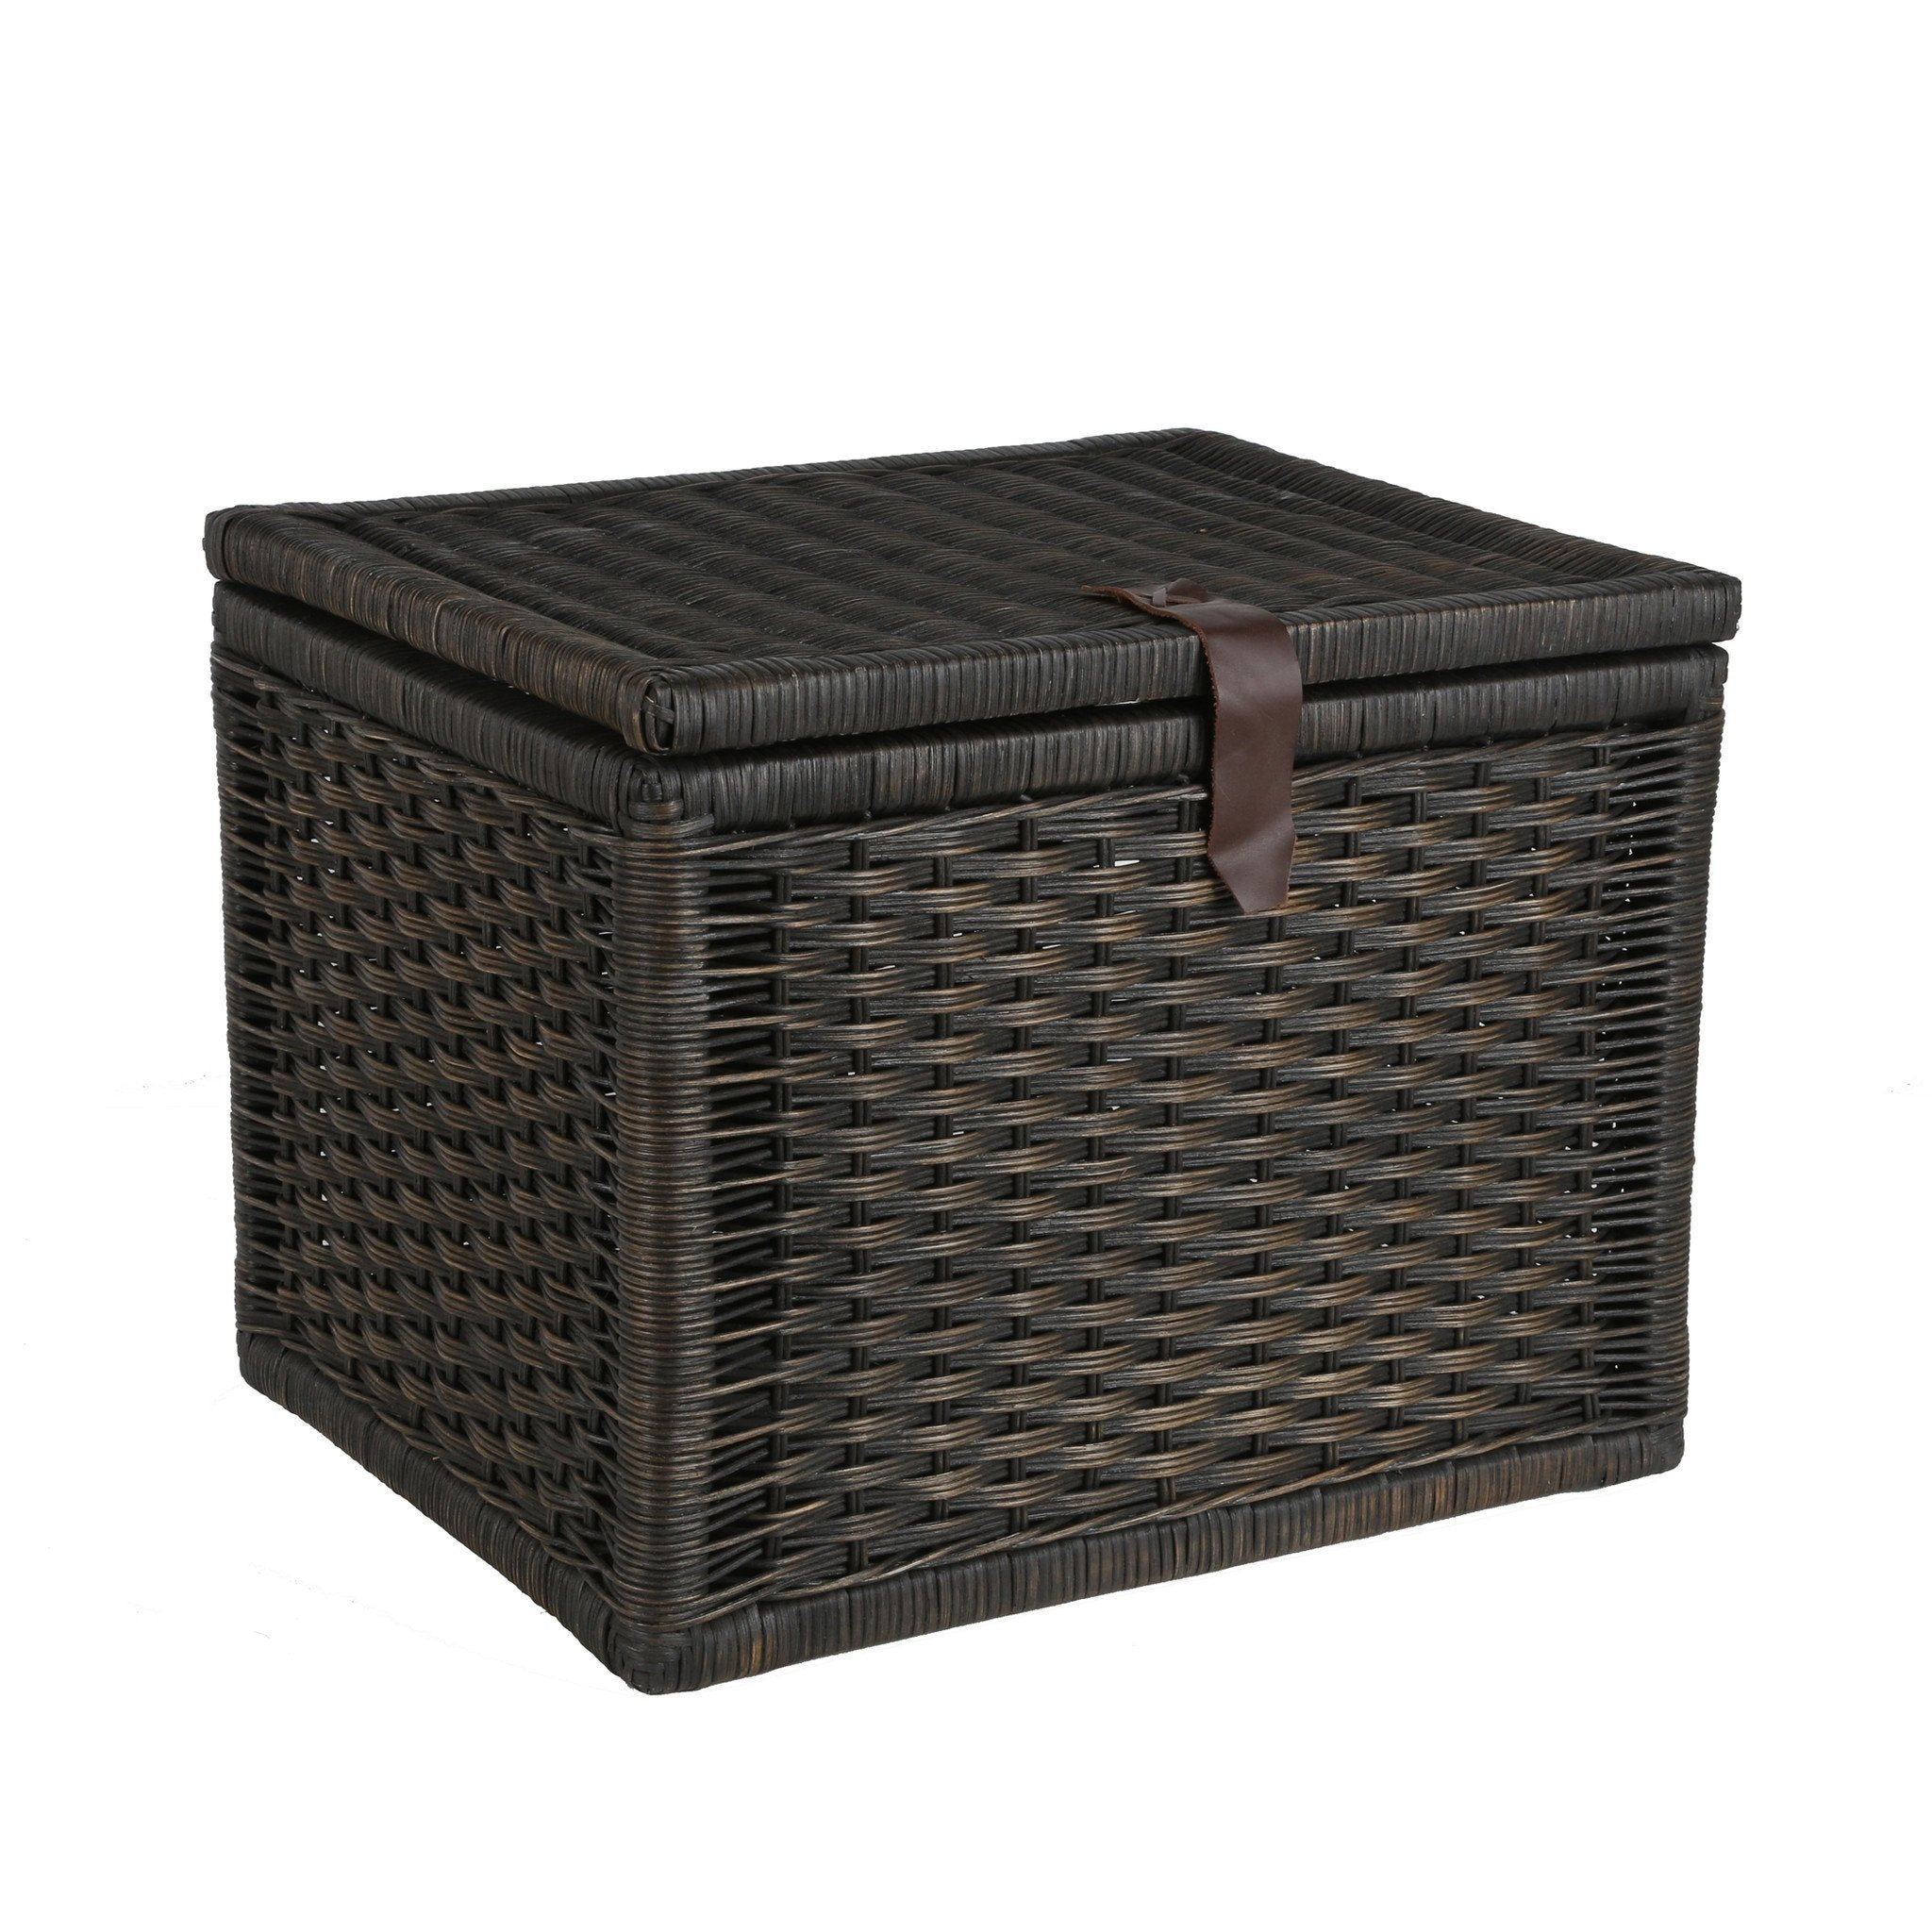 Wicker Storage Trunks & Chests - The Basket Lady